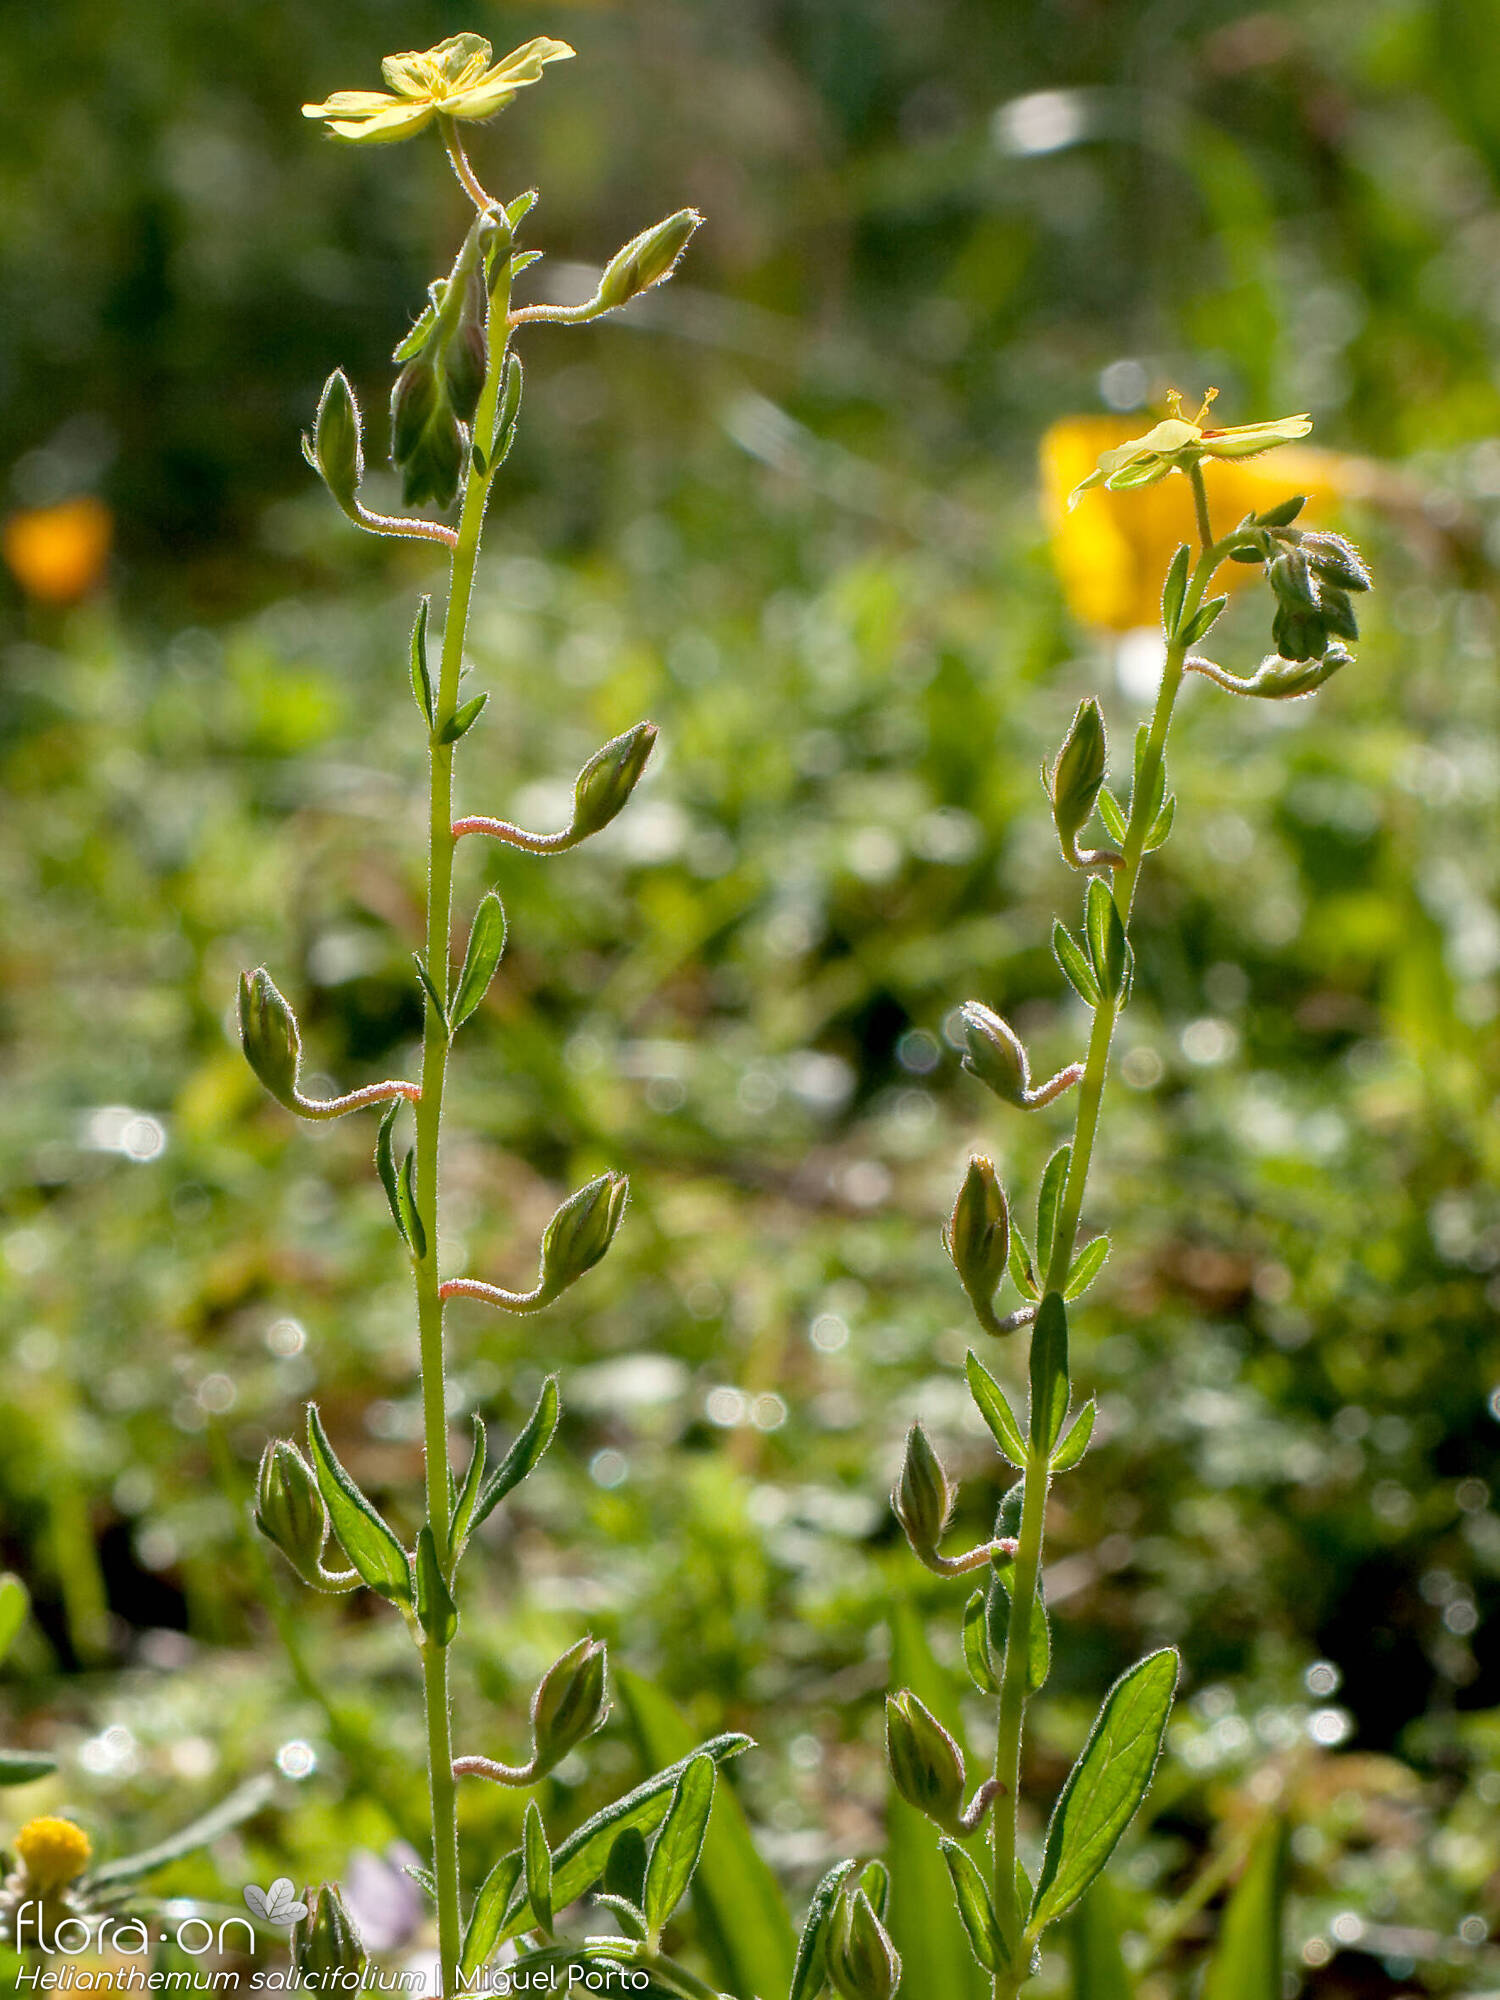 Helianthemum salicifolium - Flor (geral) | Miguel Porto; CC BY-NC 4.0